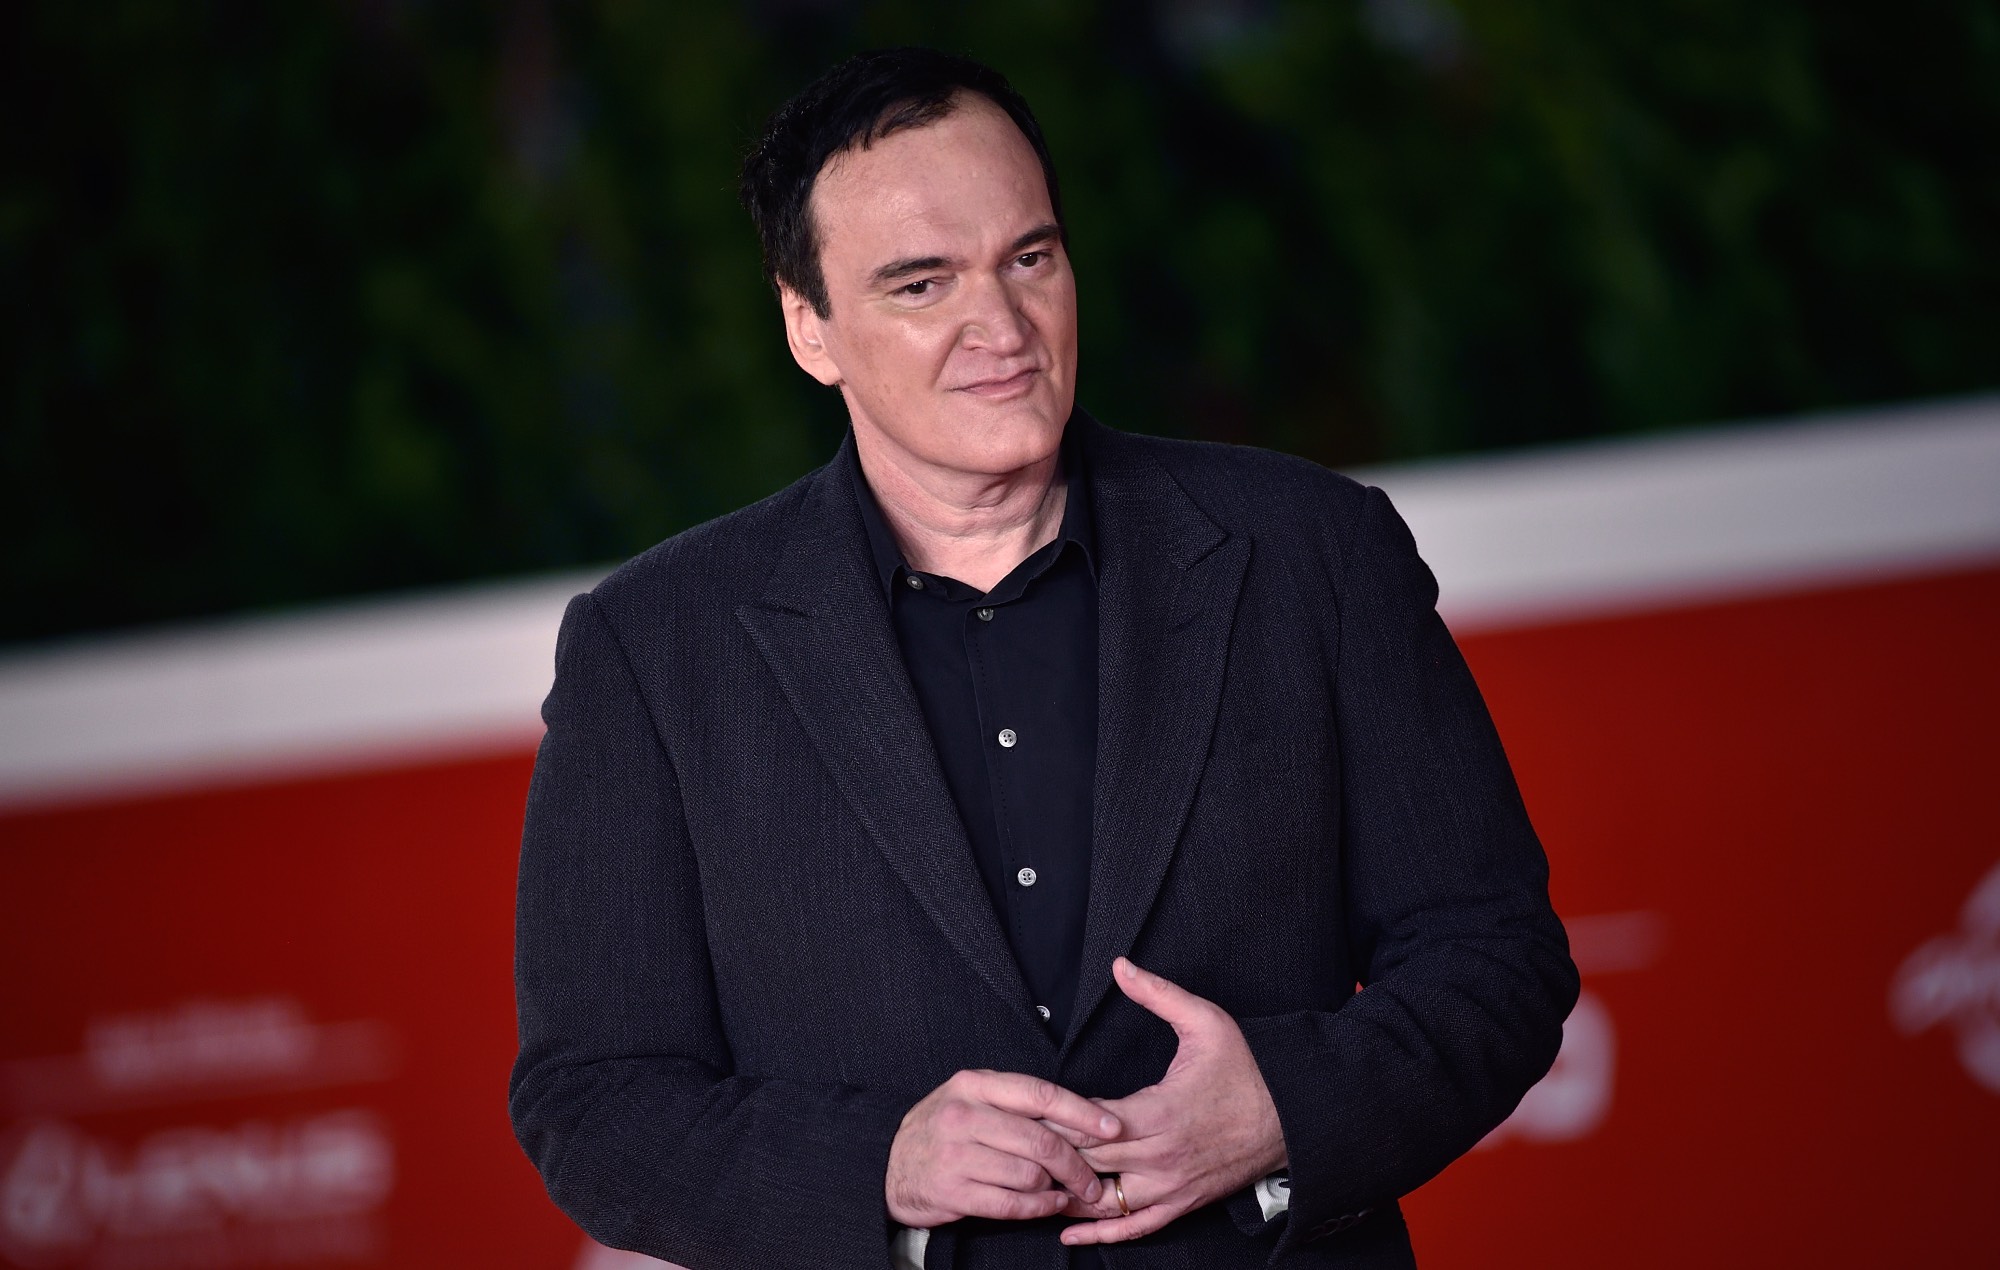 Quentin Tarantino quería recuperar personajes clásicos en la película final descartada